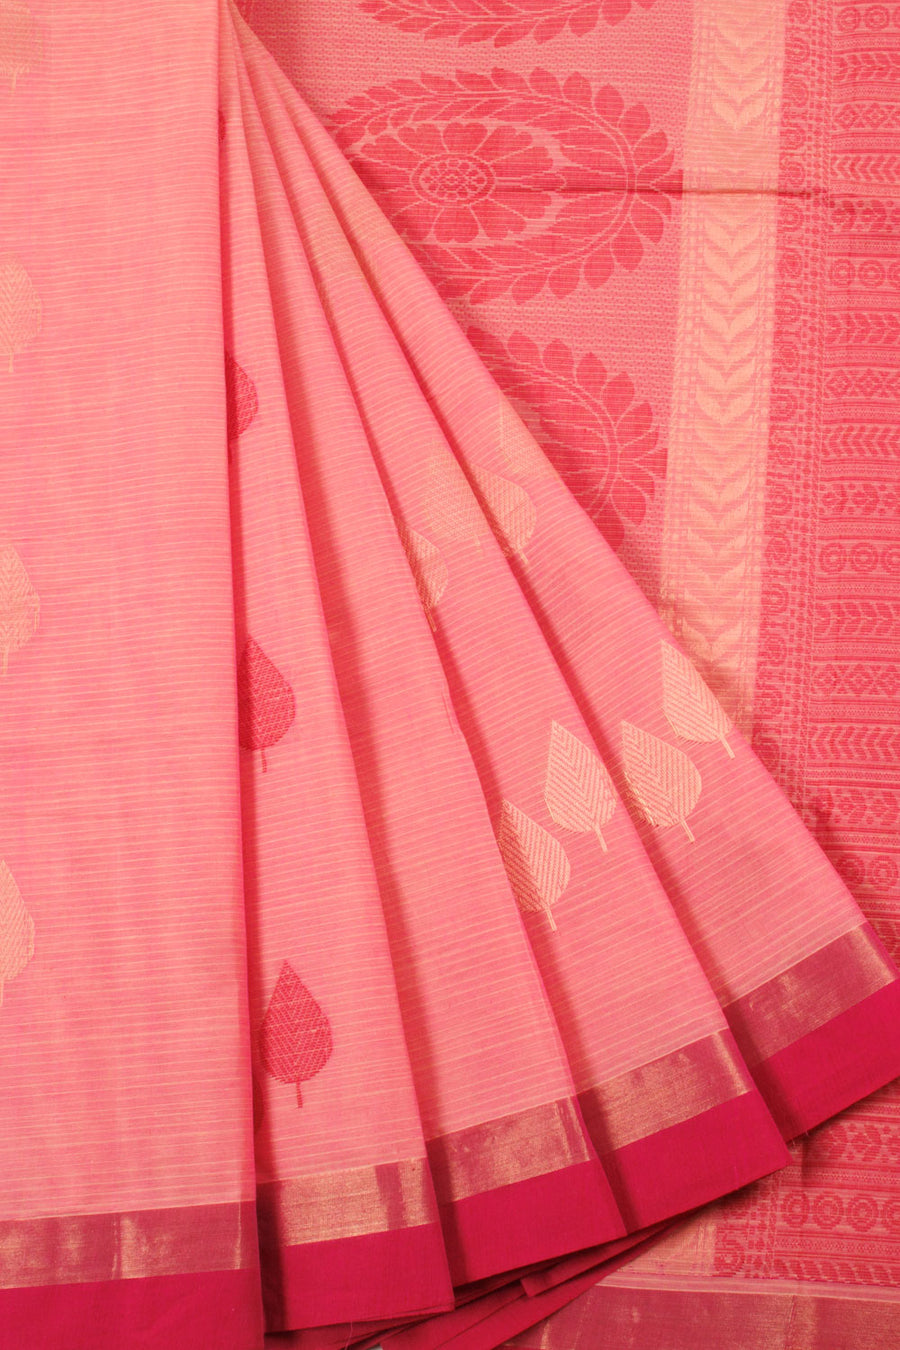 Pink Handwoven Kovai Cotton Saree with Leaf Motifs, Stripes Design and Floral Buttas Pallu